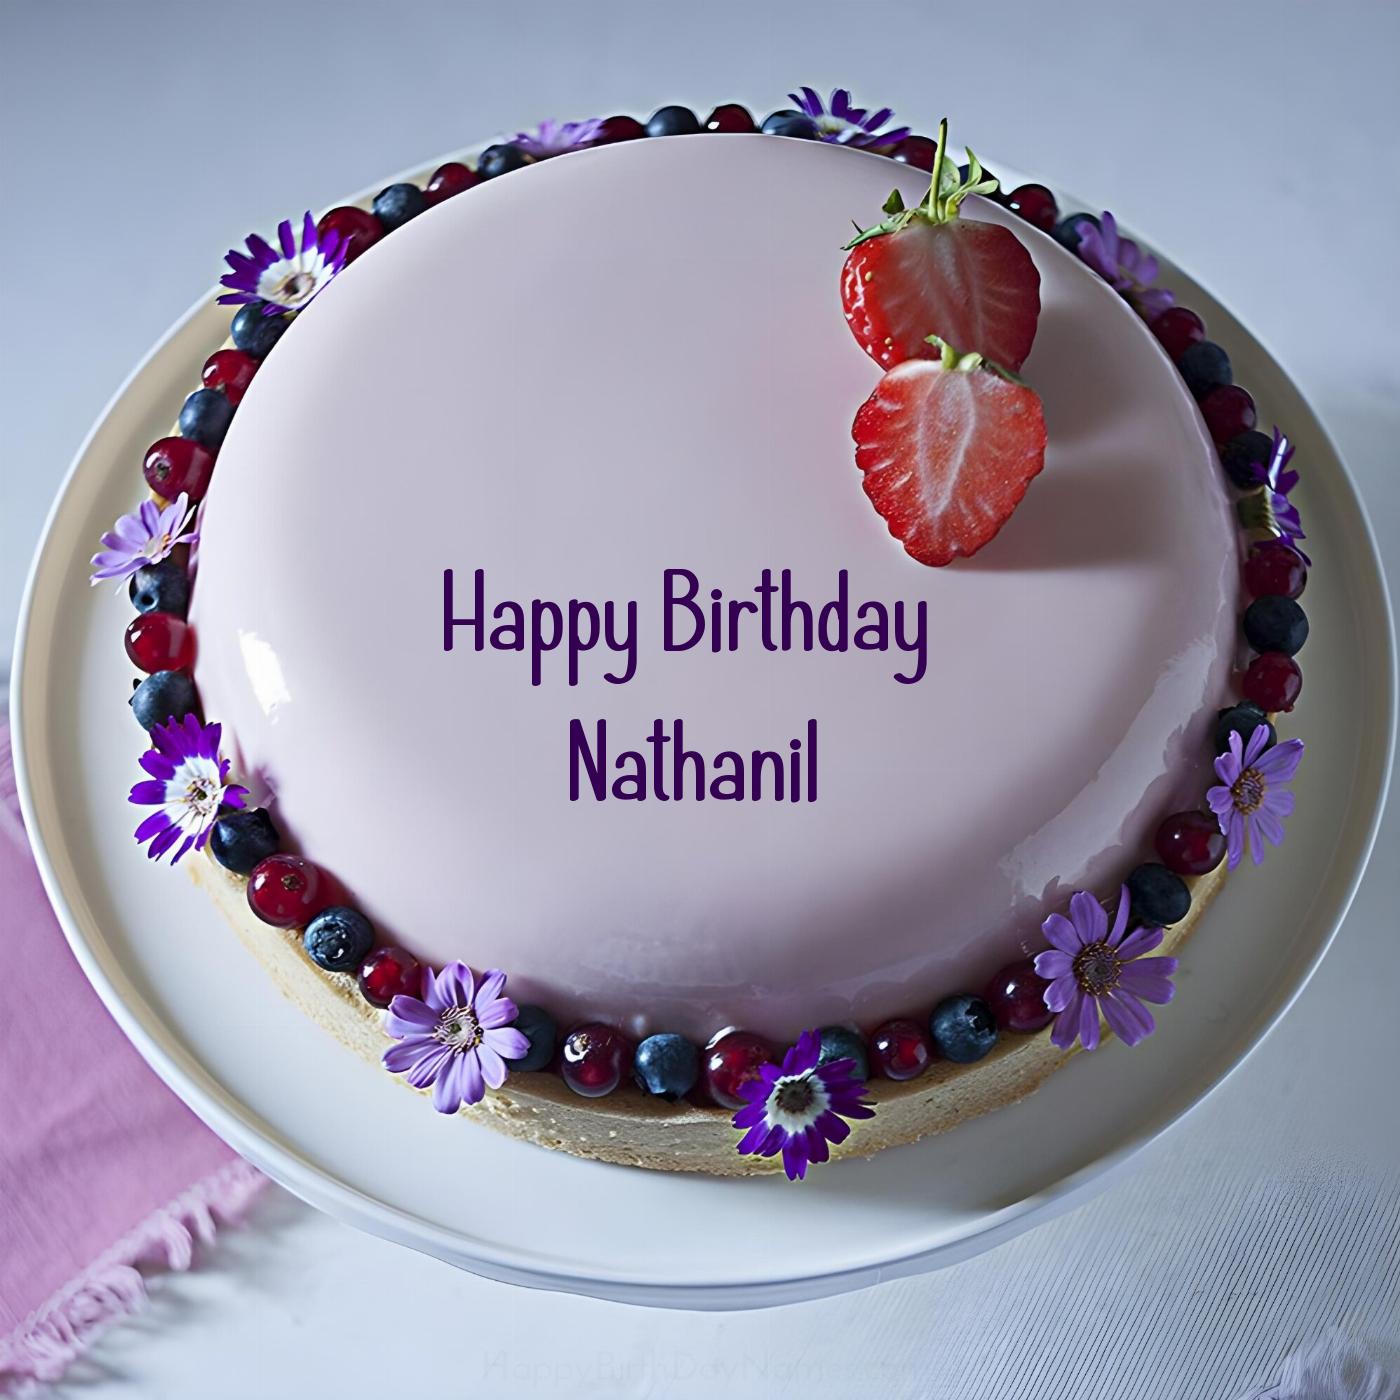 Happy Birthday Nathanil Strawberry Flowers Cake